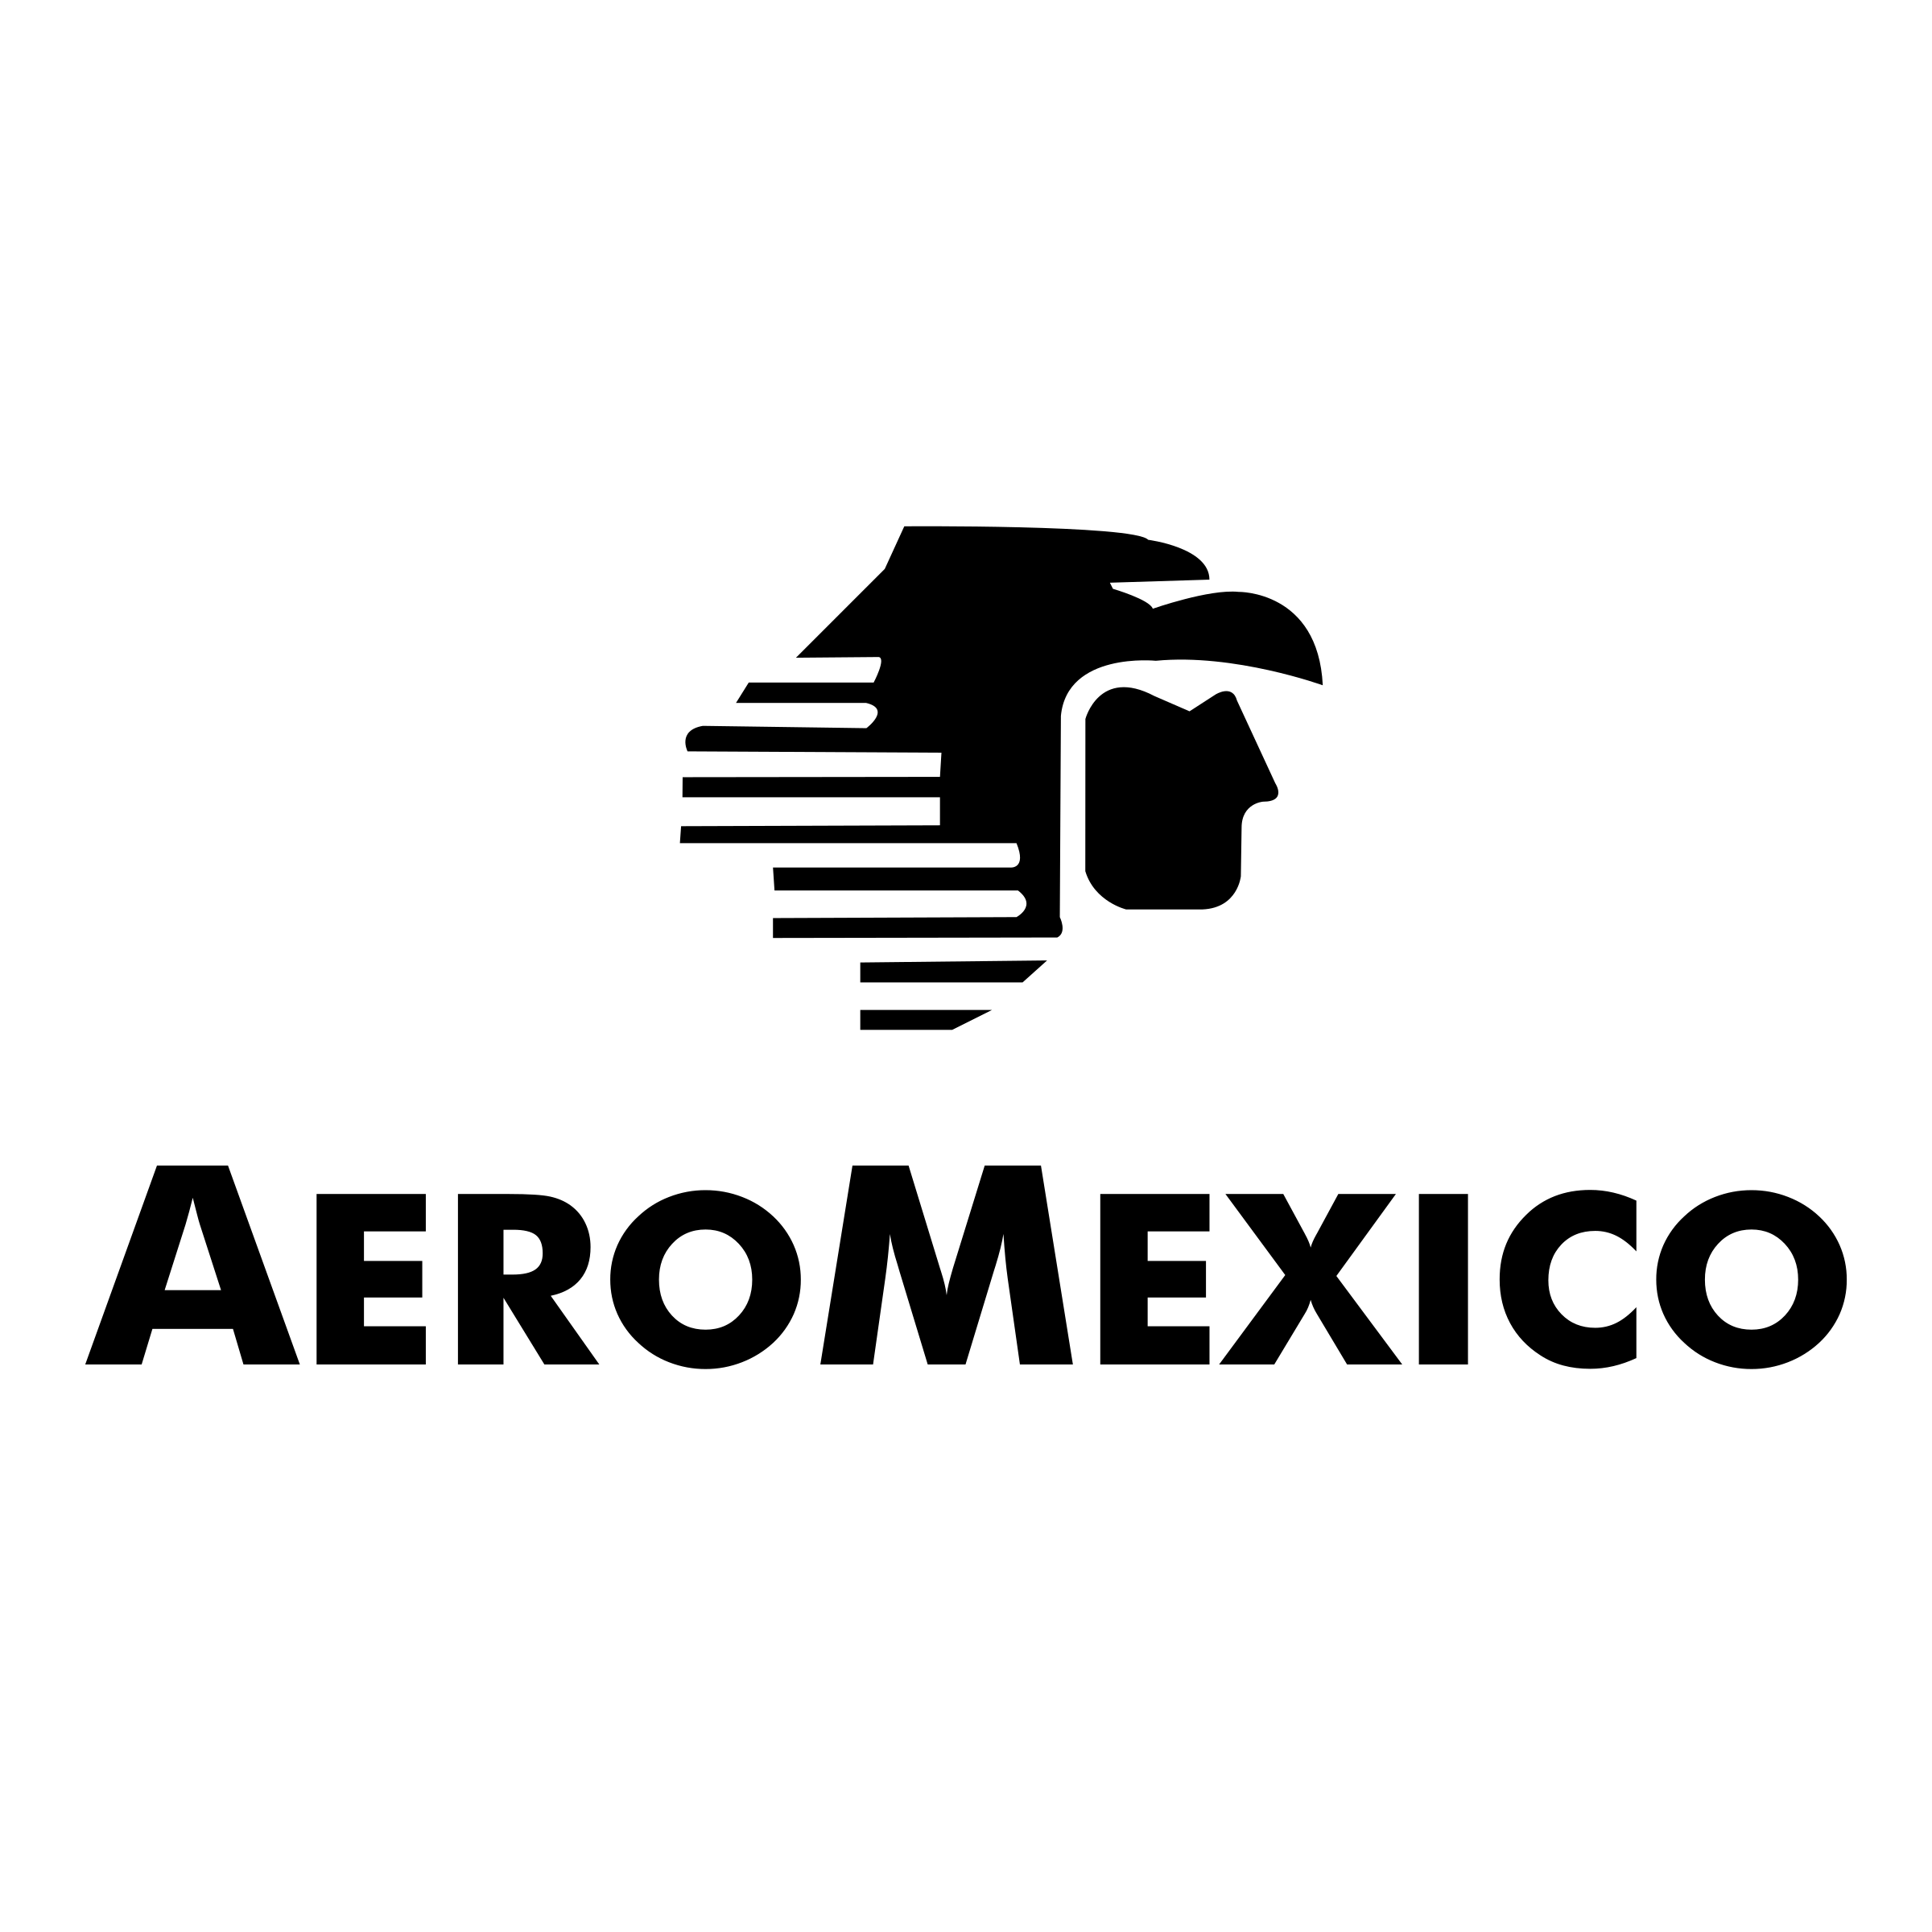 Aeromexico Logo - AeroMexico Logo PNG Transparent & SVG Vector - Freebie Supply